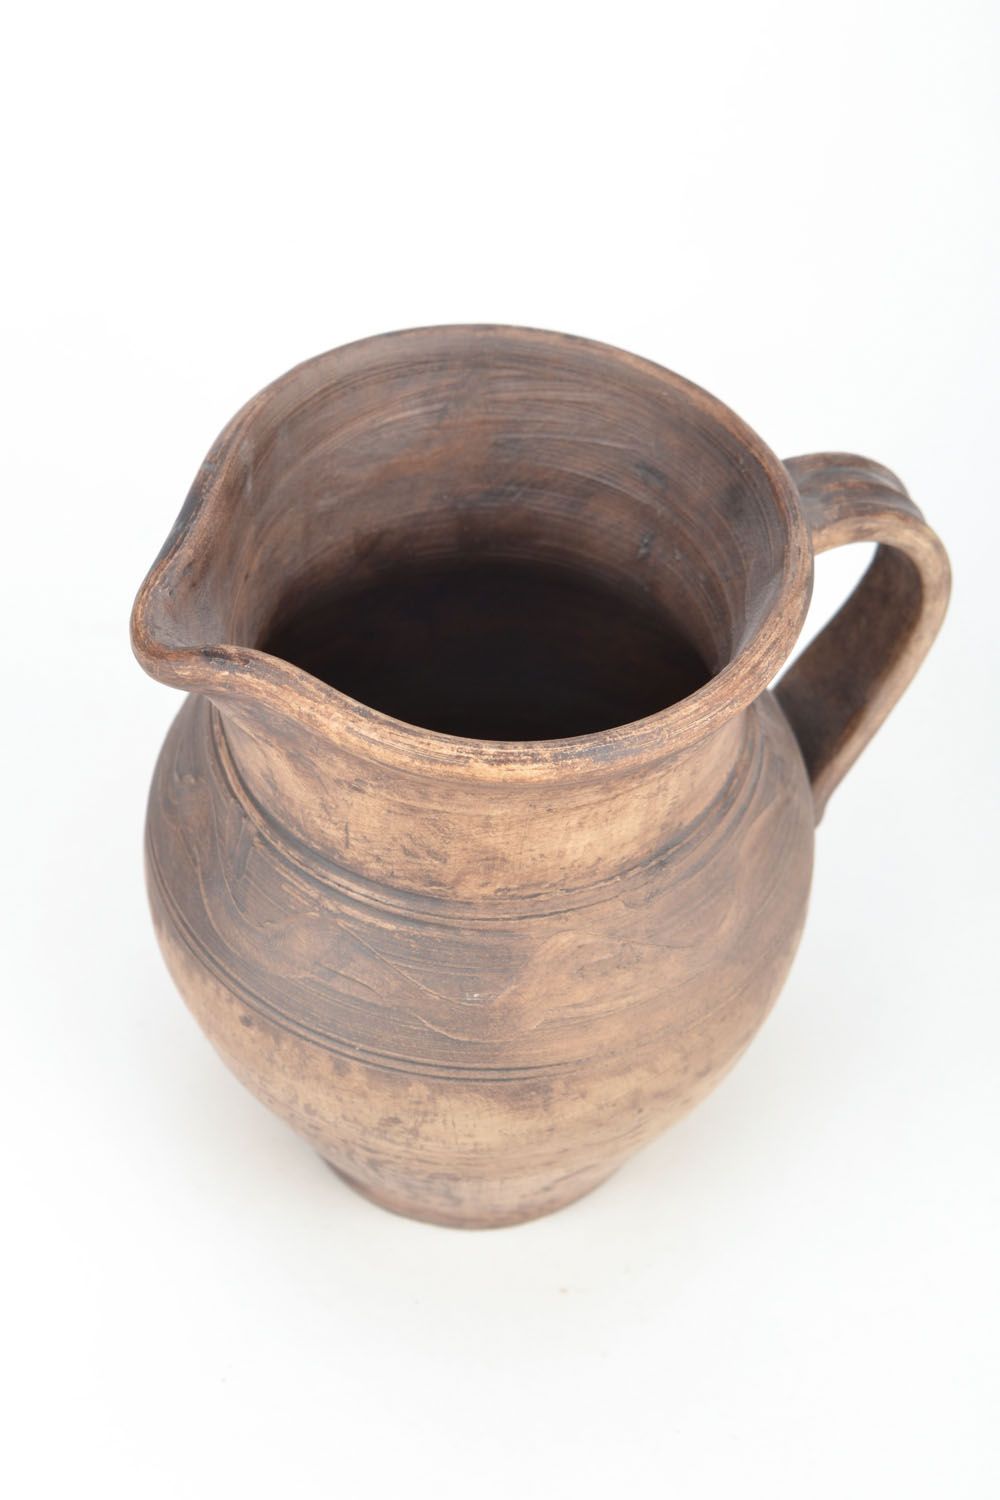 30 oz ceramic lead-free glazed milk pitcher in classic style 5,5 inches, 1 lb photo 3